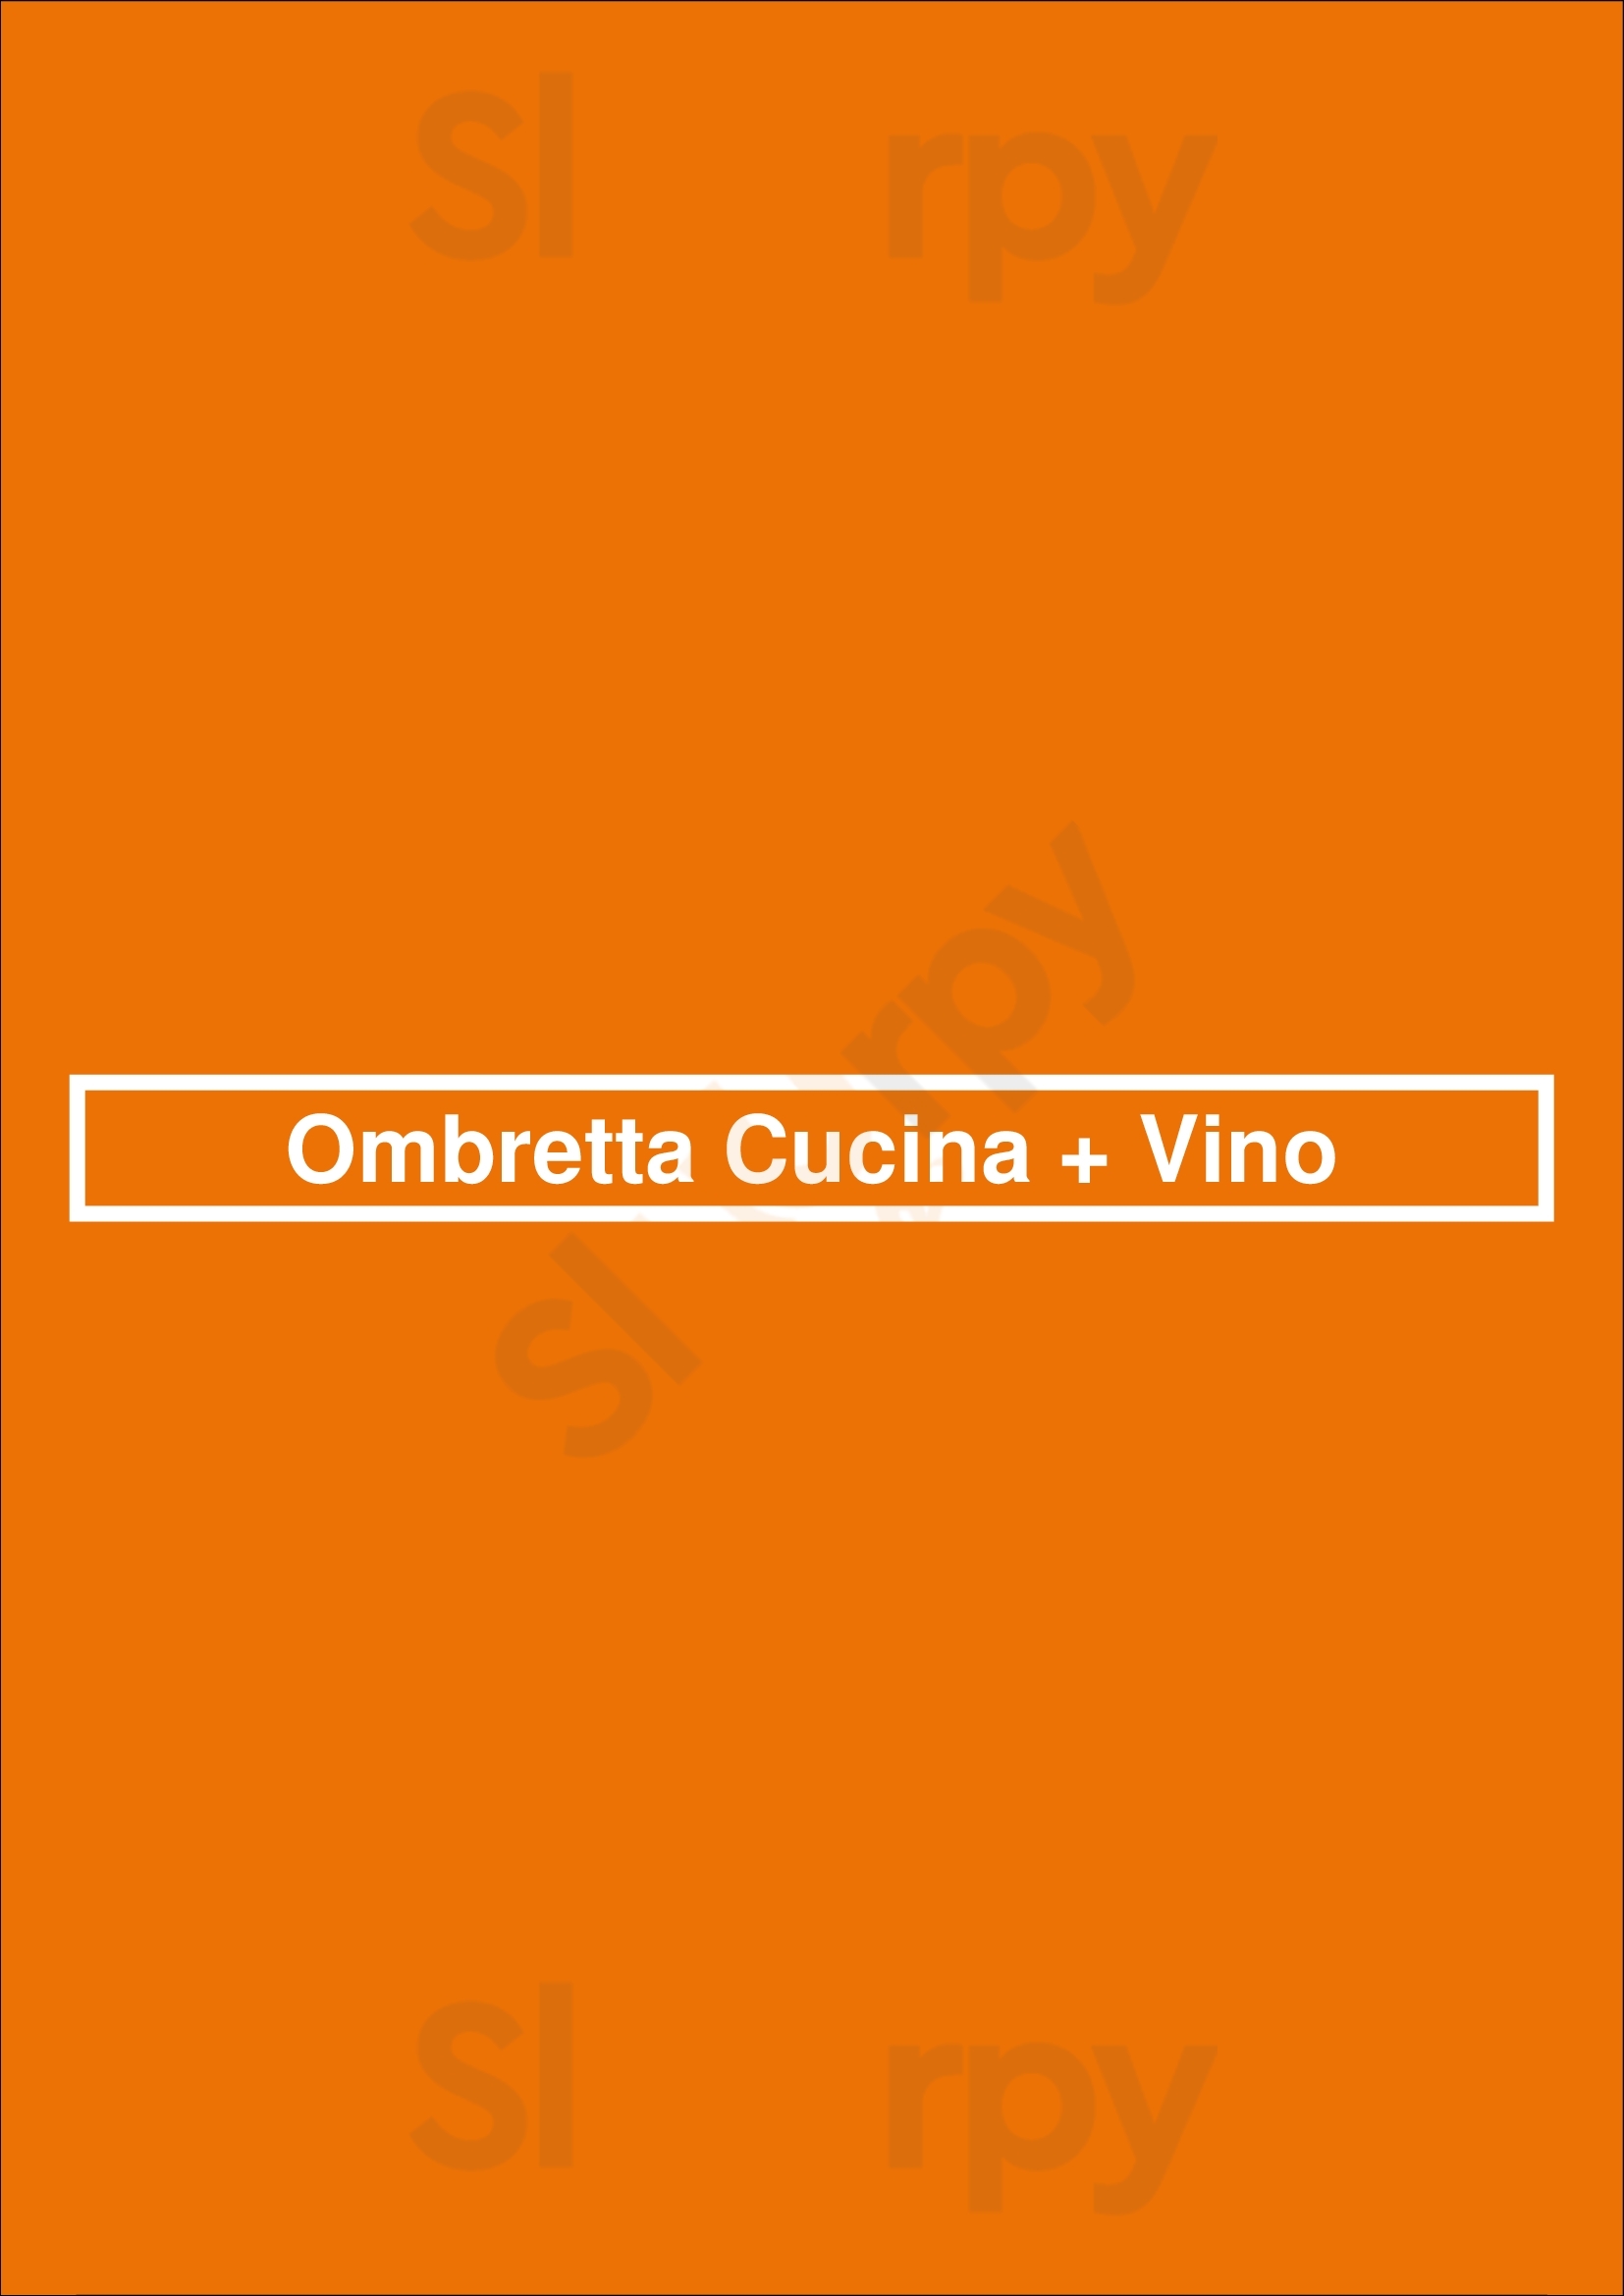 Ombretta Cucina + Vino Mississauga Menu - 1